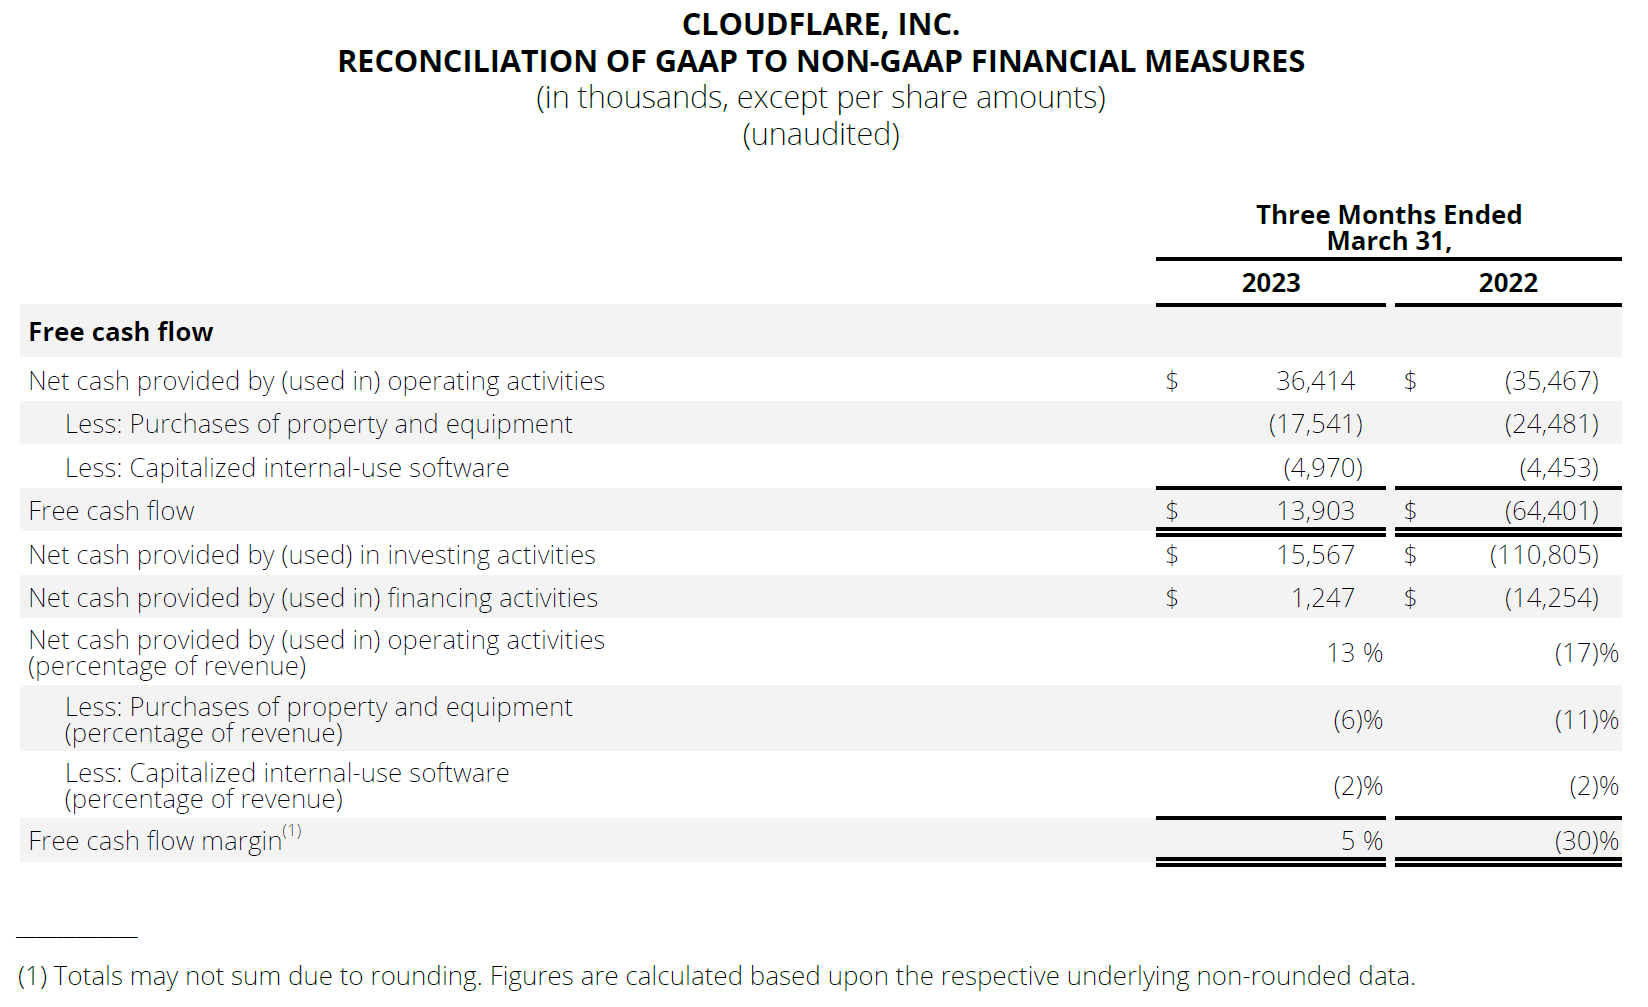 RECONCILIATION OF GAAP TO NON-GAAP FINANCIAL MEASURES 